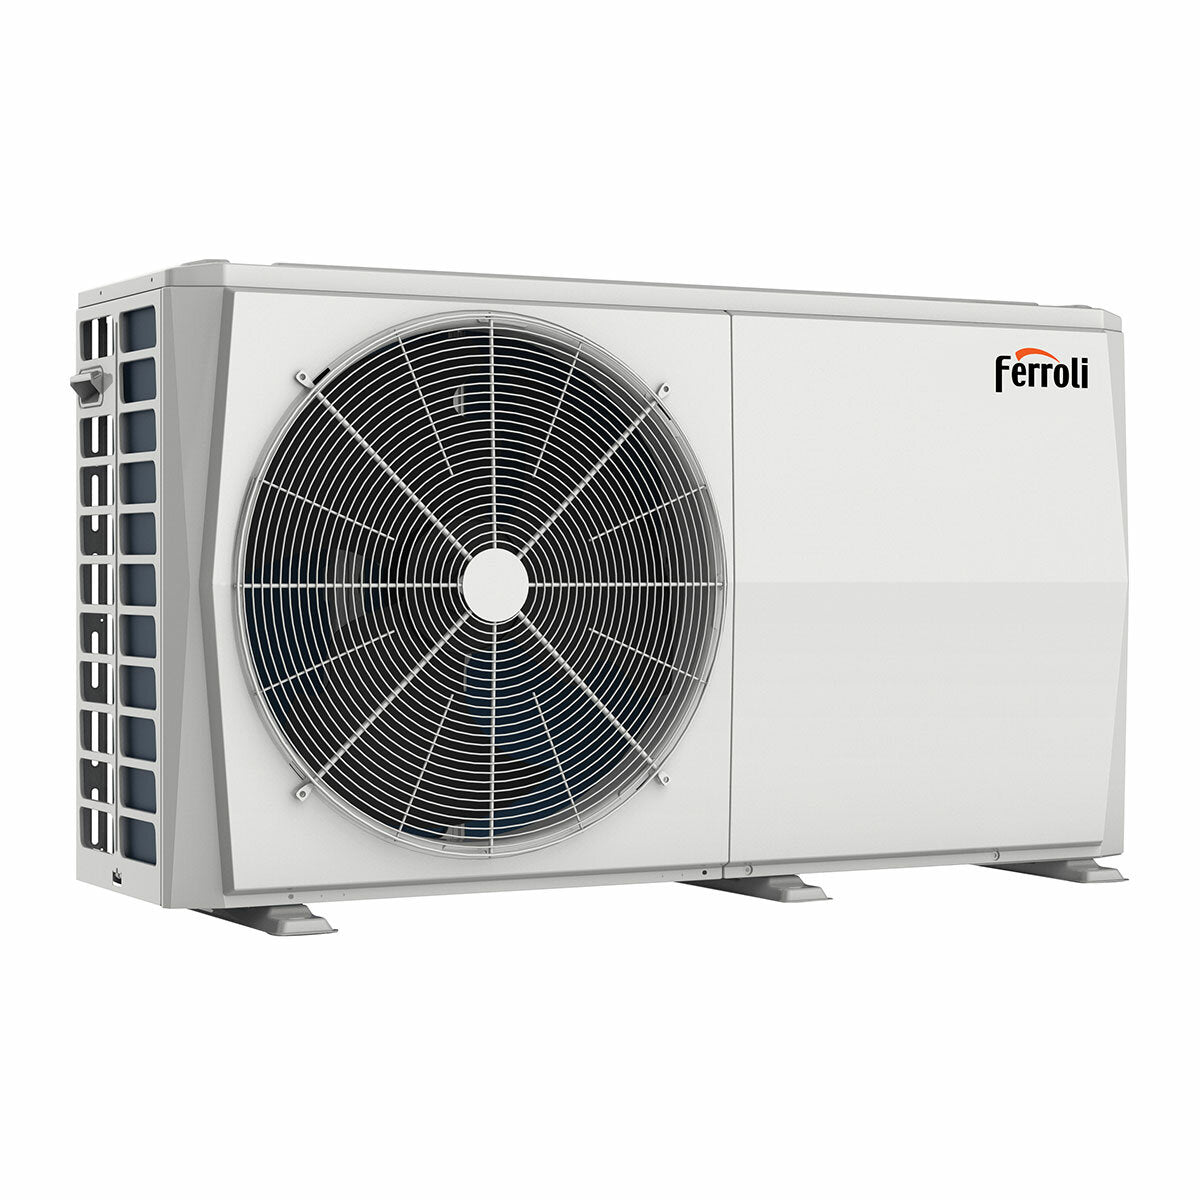 Ferroli Omnia M 3.2 6.3 kW air-water heat pump monobloc single-phase inverter R32 A++